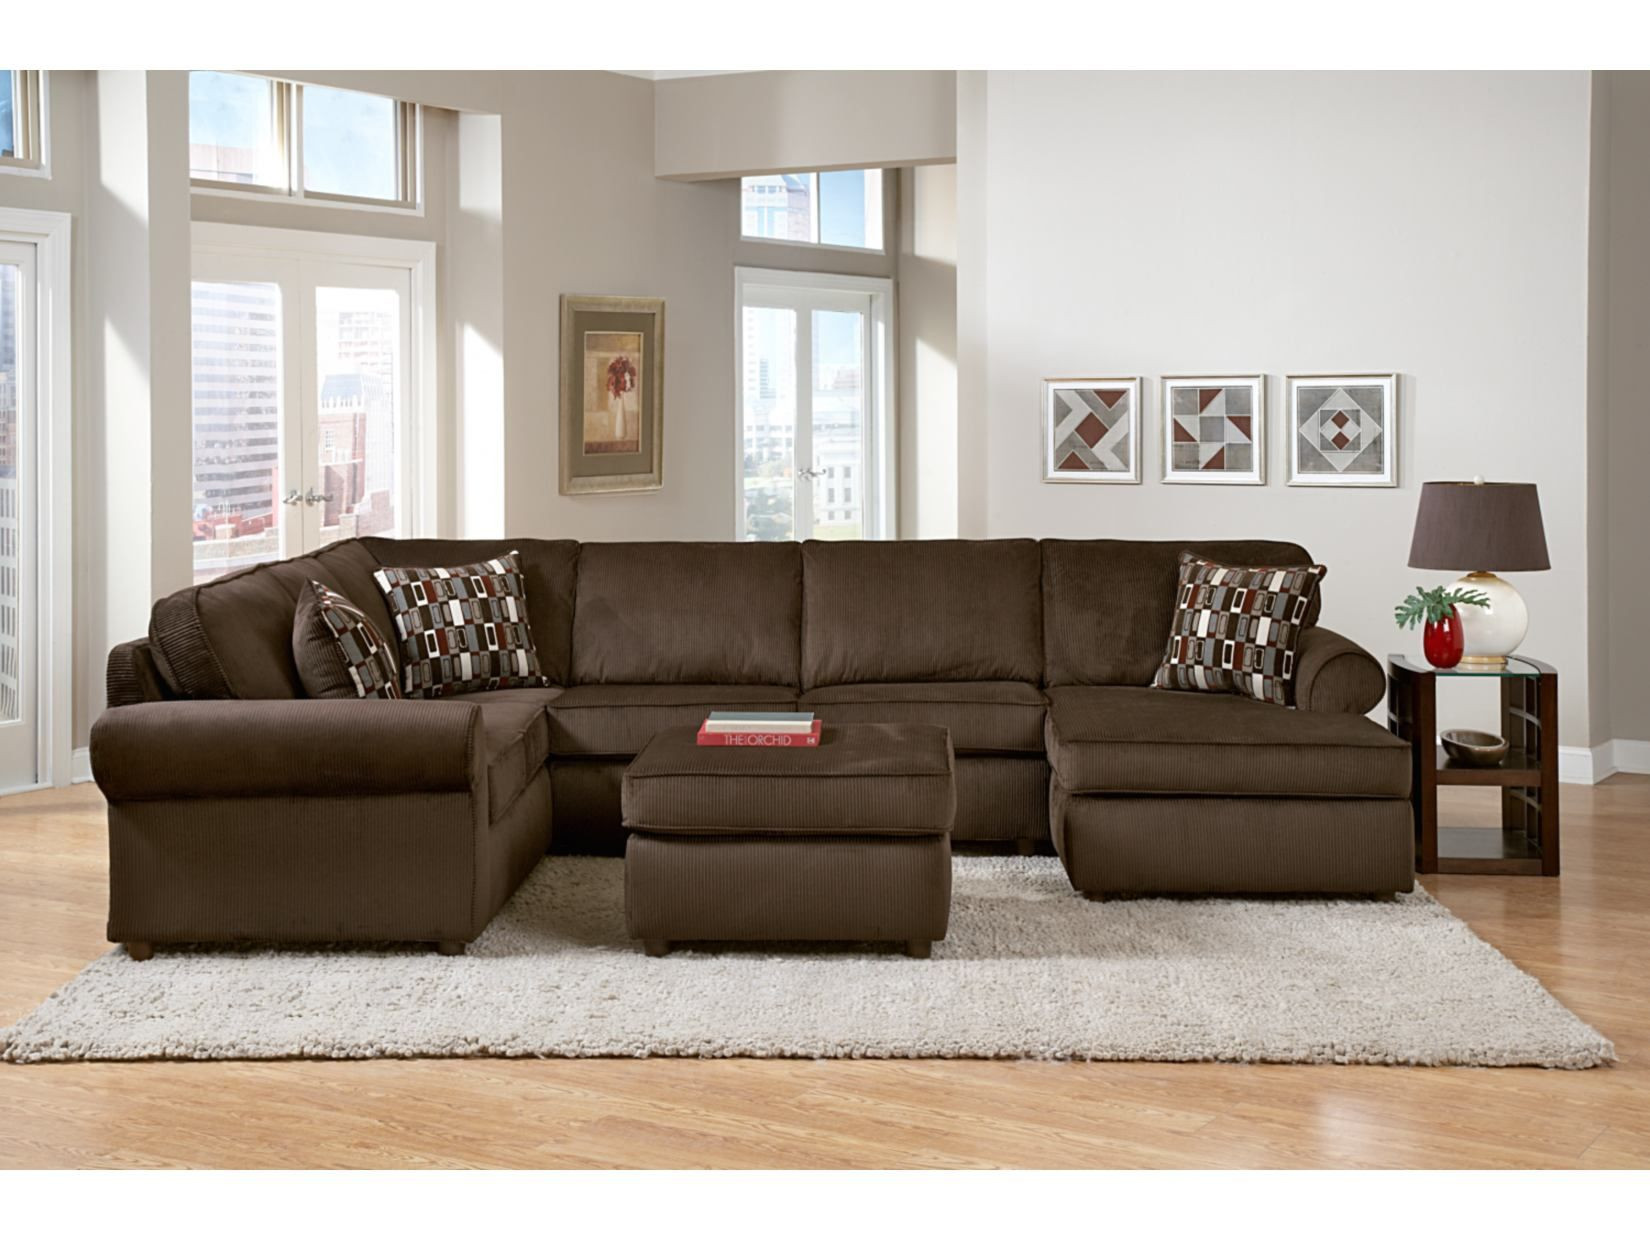 value furniture living room specials